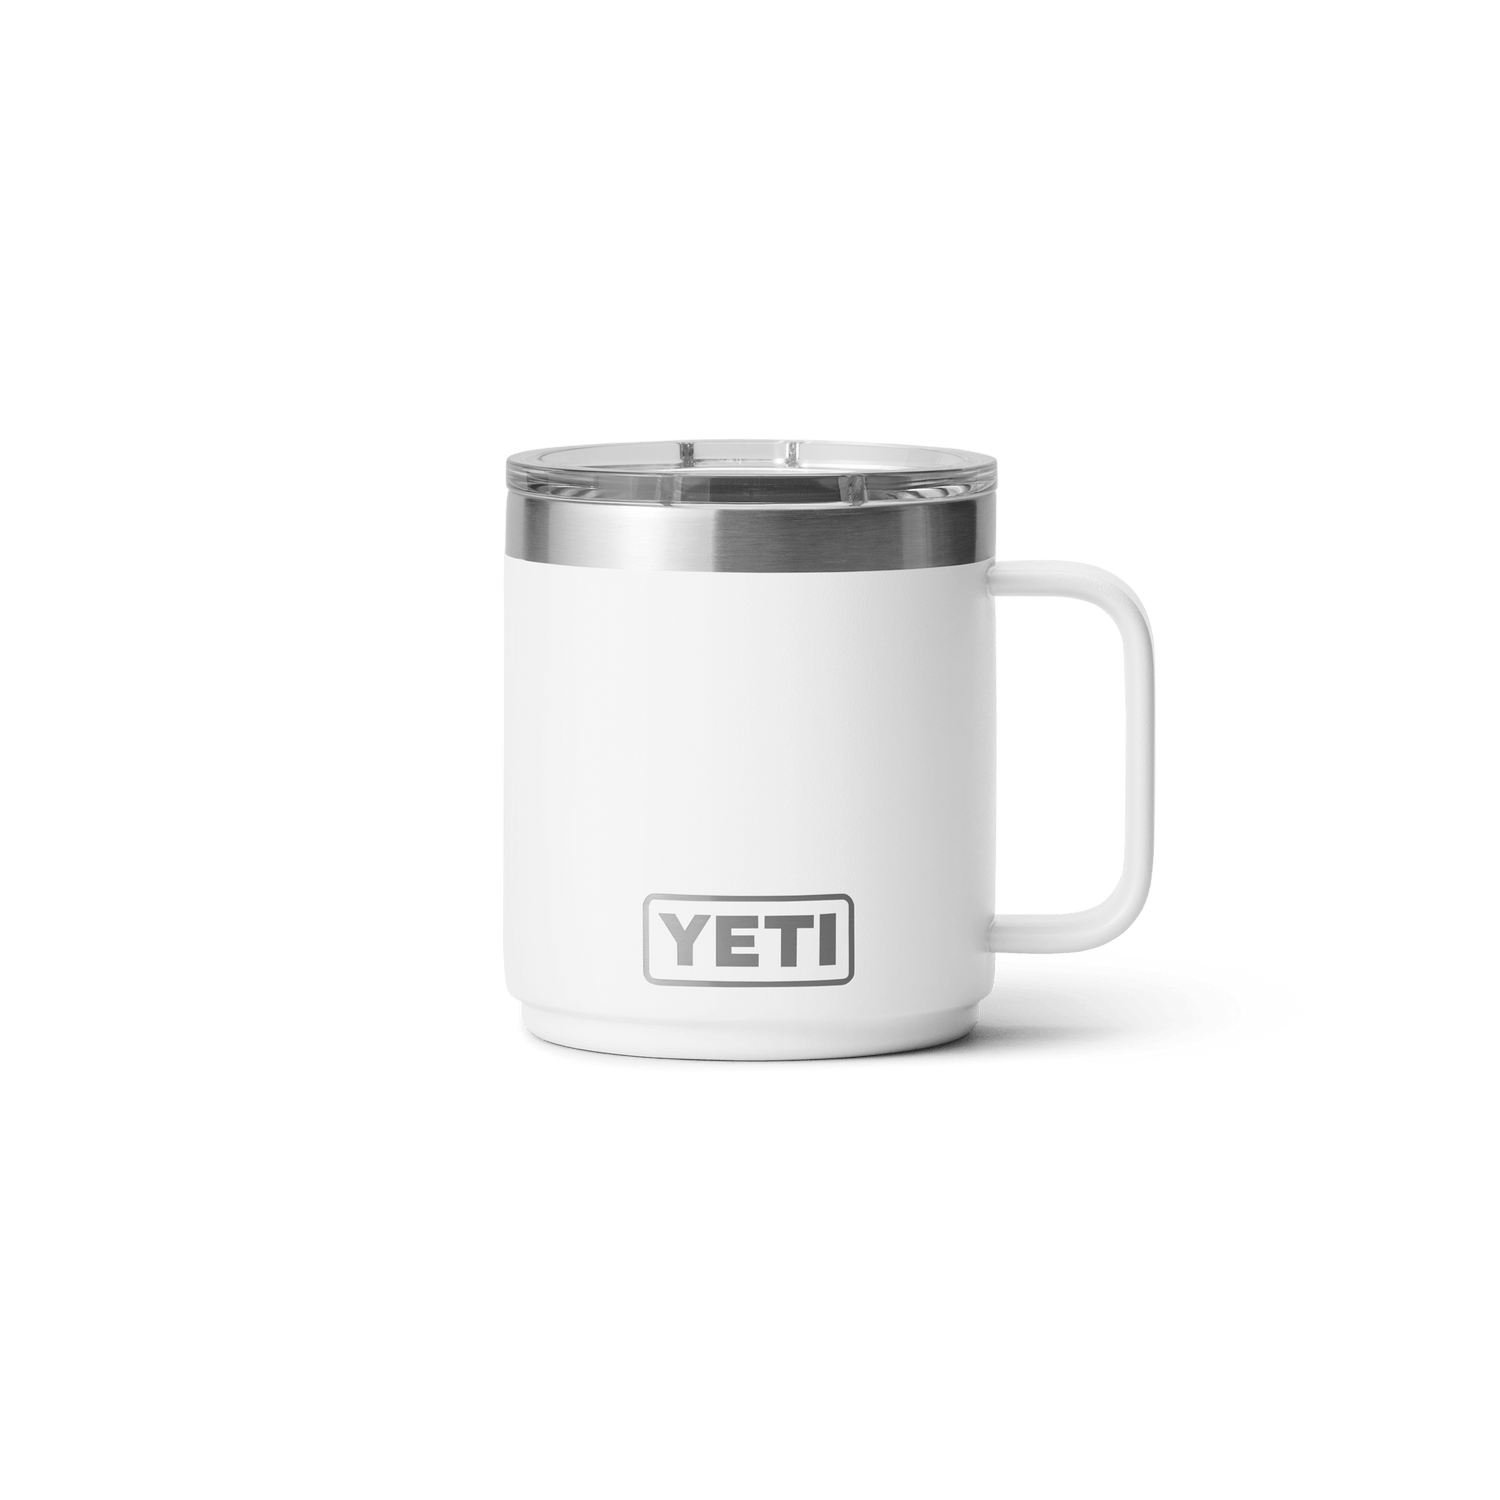 YETI Rambler Mug White (296ml)